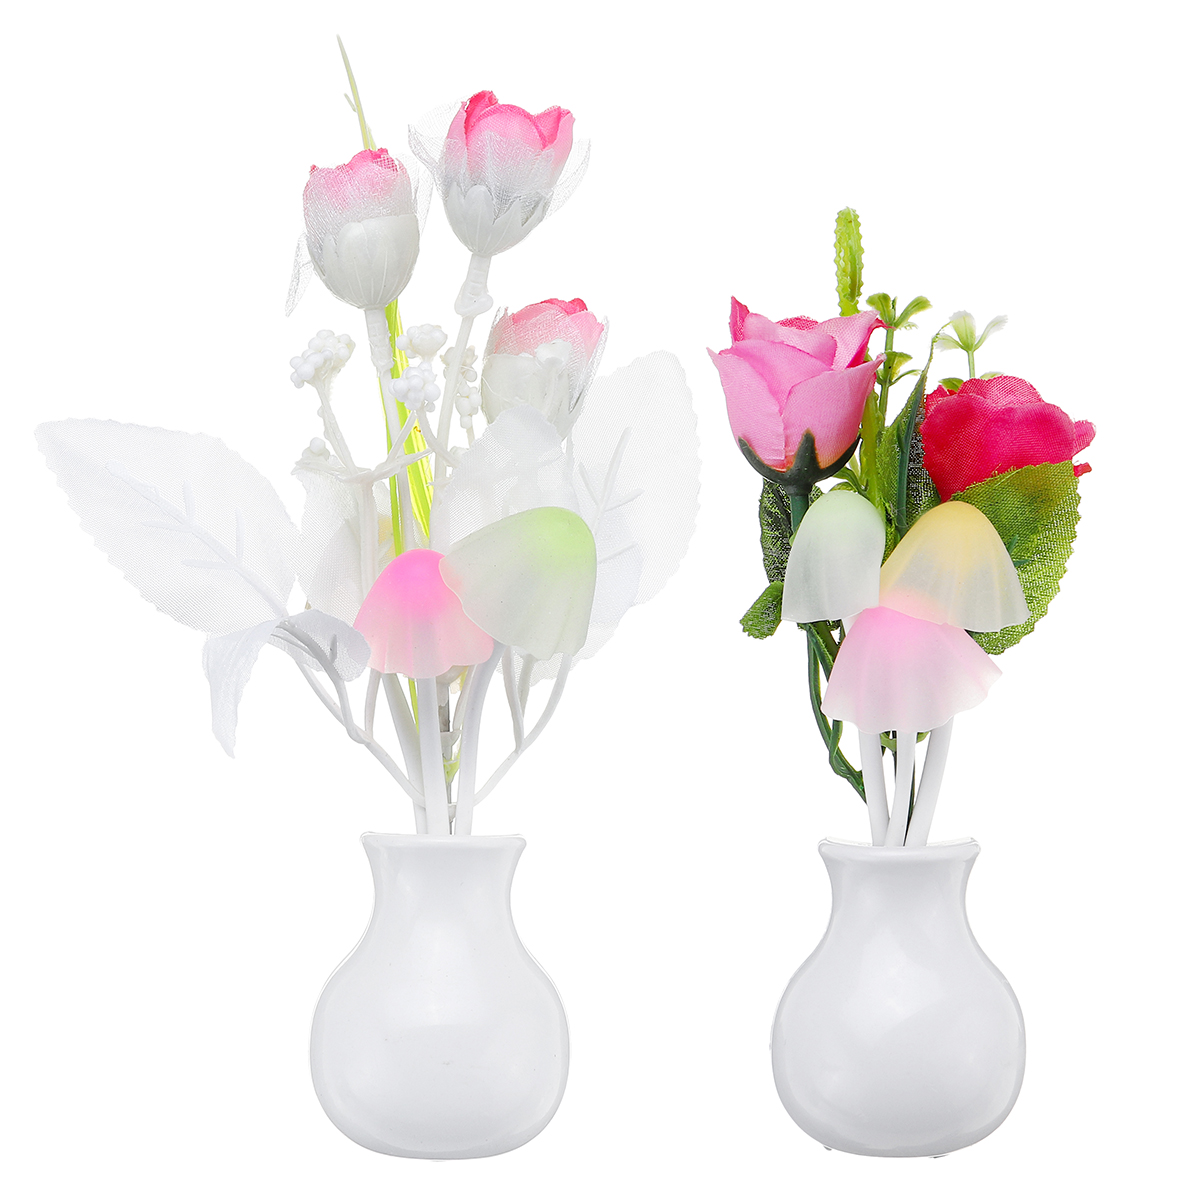 Romantic-Flower-Mushroom-LED-Night-Light-Sensor-Baby-Bed-Lamp-Decor-US-Plug-1691637-7